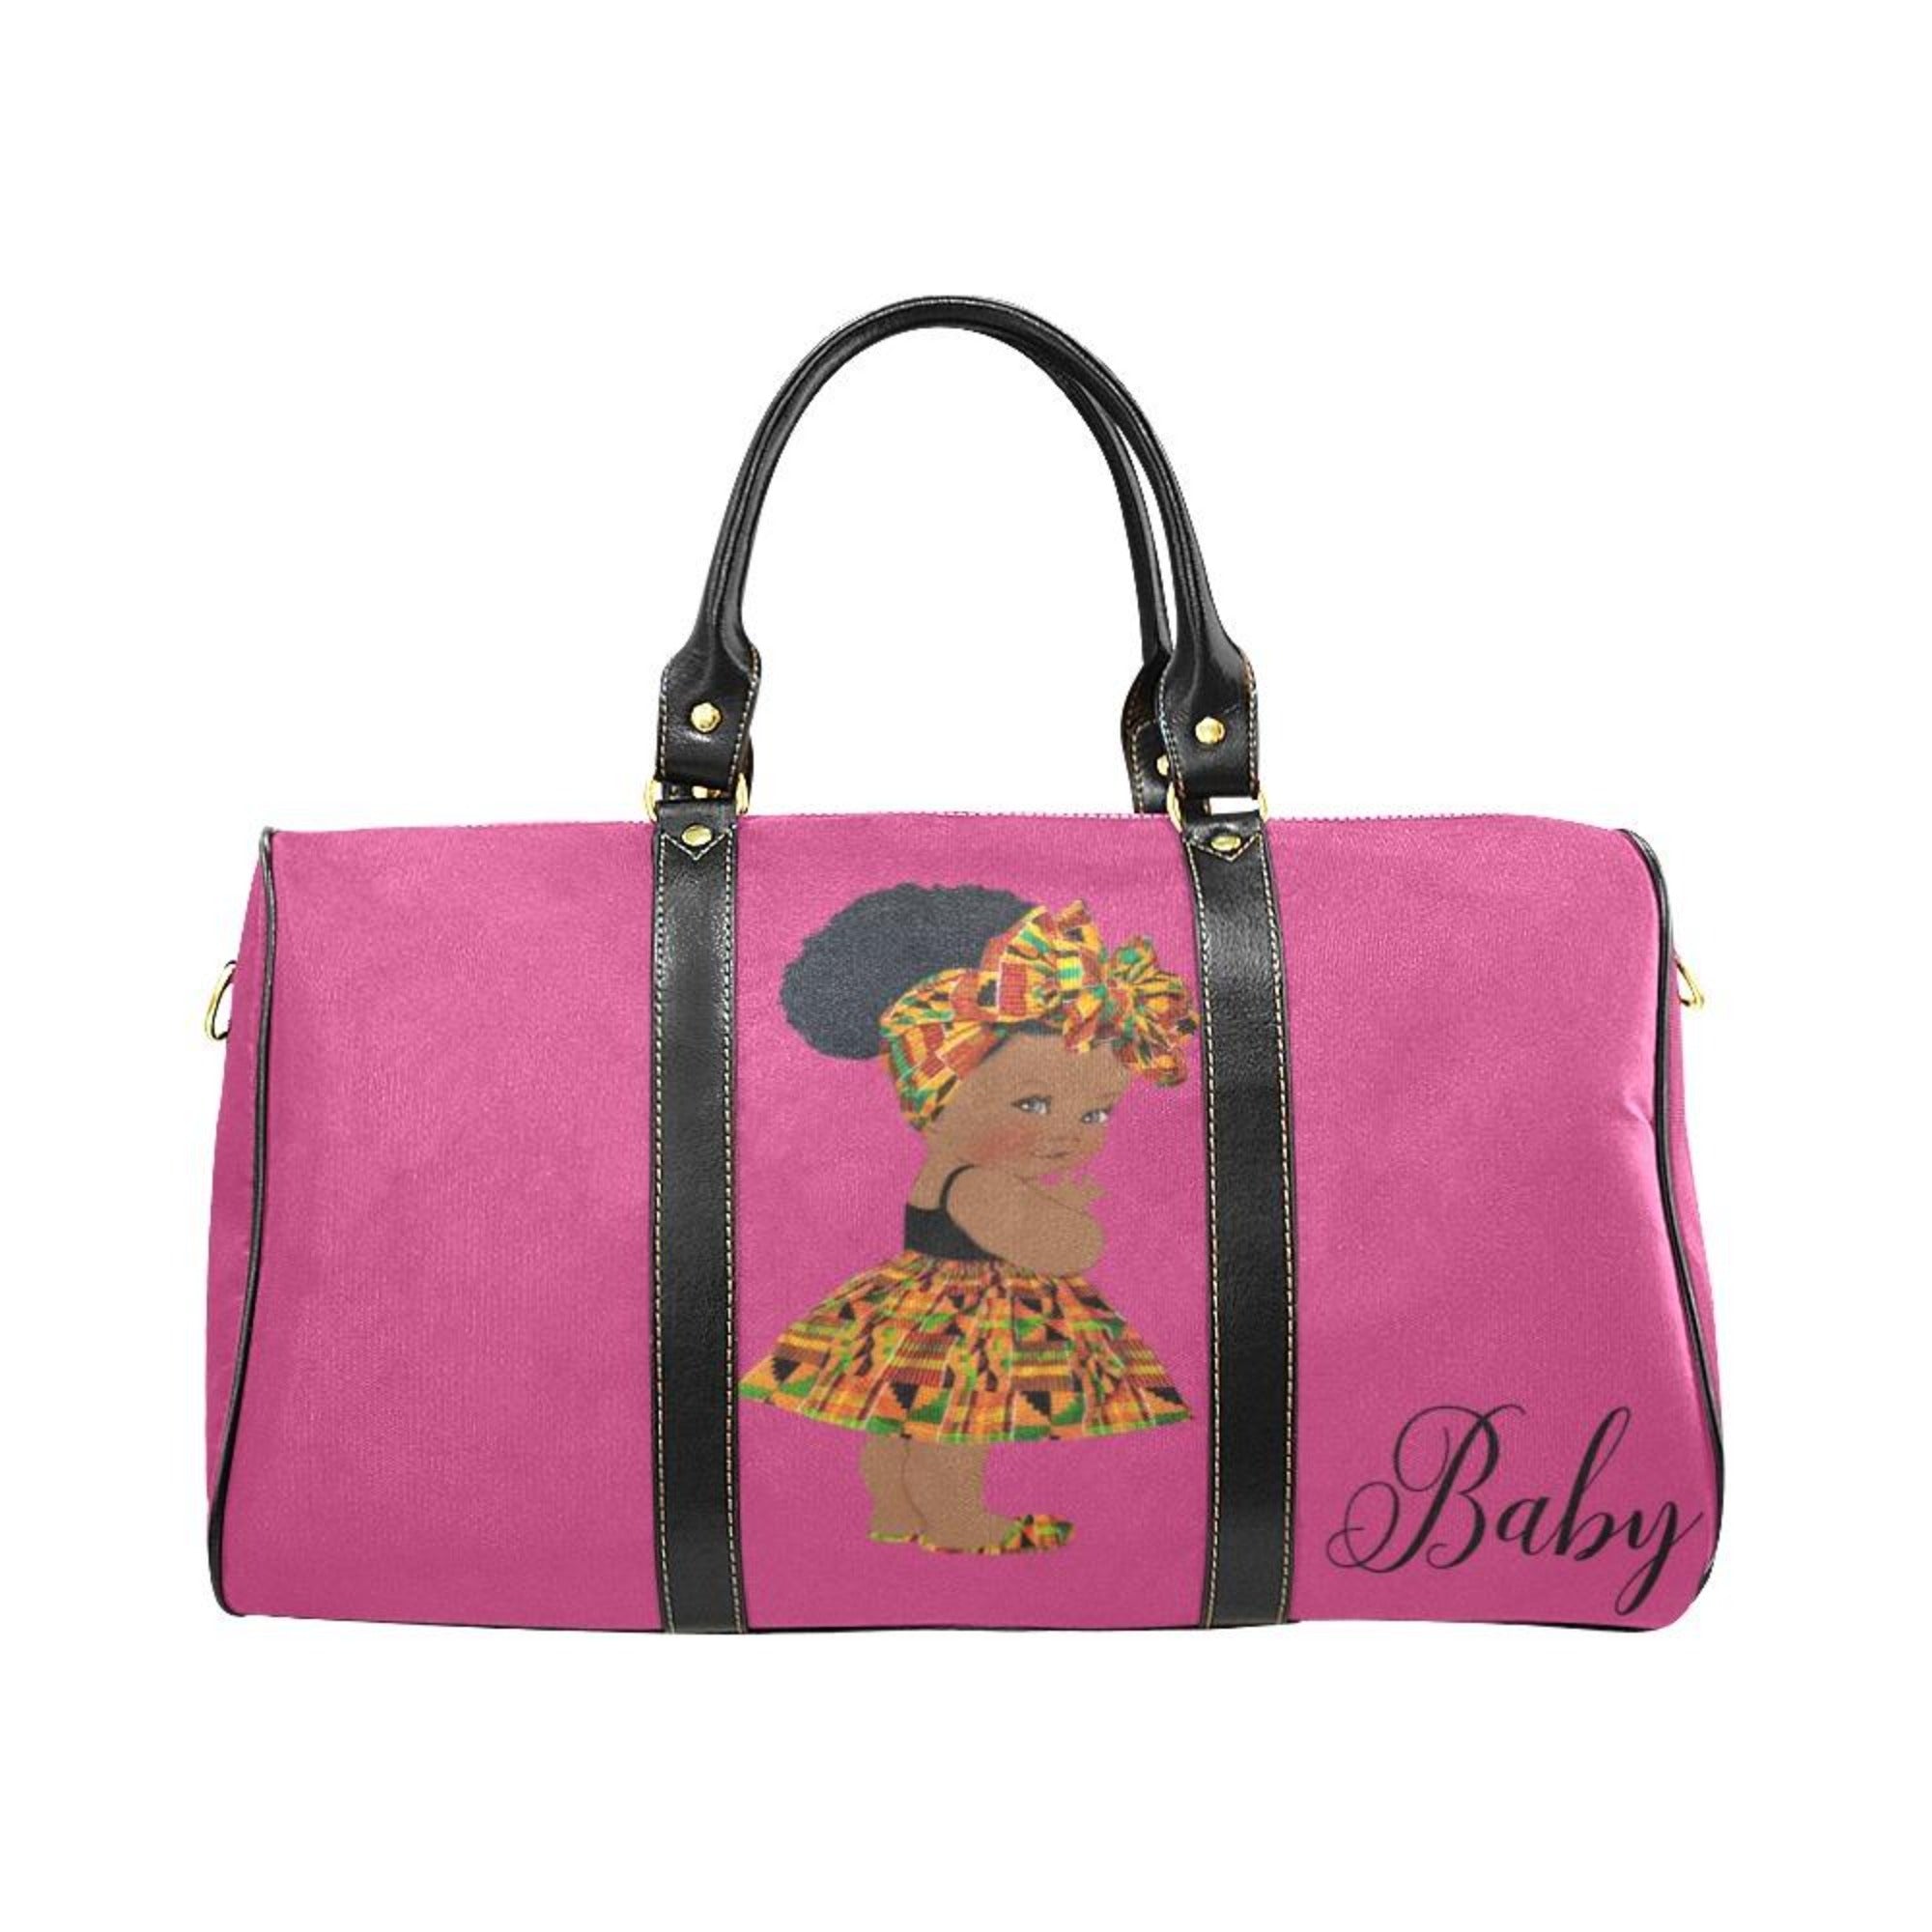 Custom Diaper Tote Bag - Ethnic Super Cute African American Baby Girl - Raspberry Red Travel Tote Baby Bag